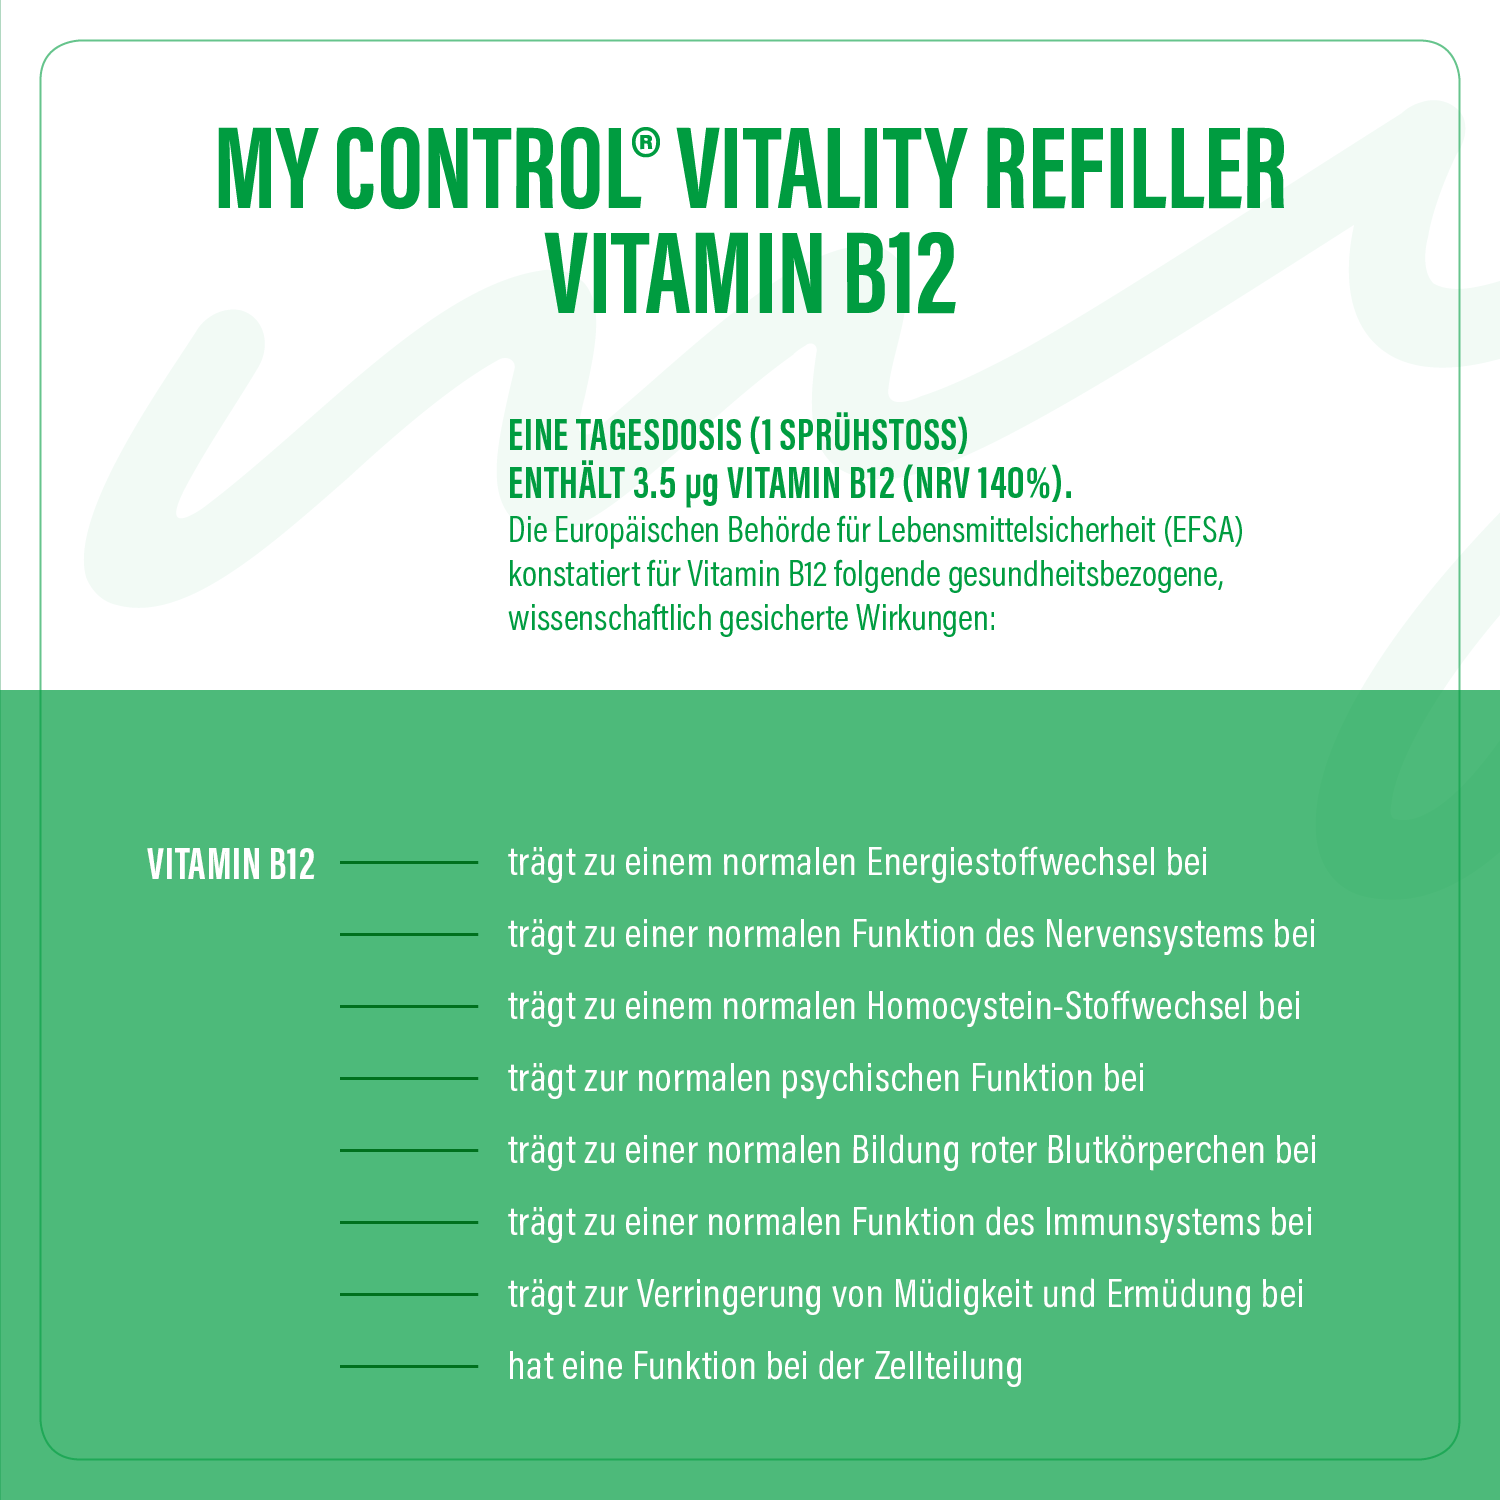 Refiller Vitamin B12 Tagesdosis und Health Claims